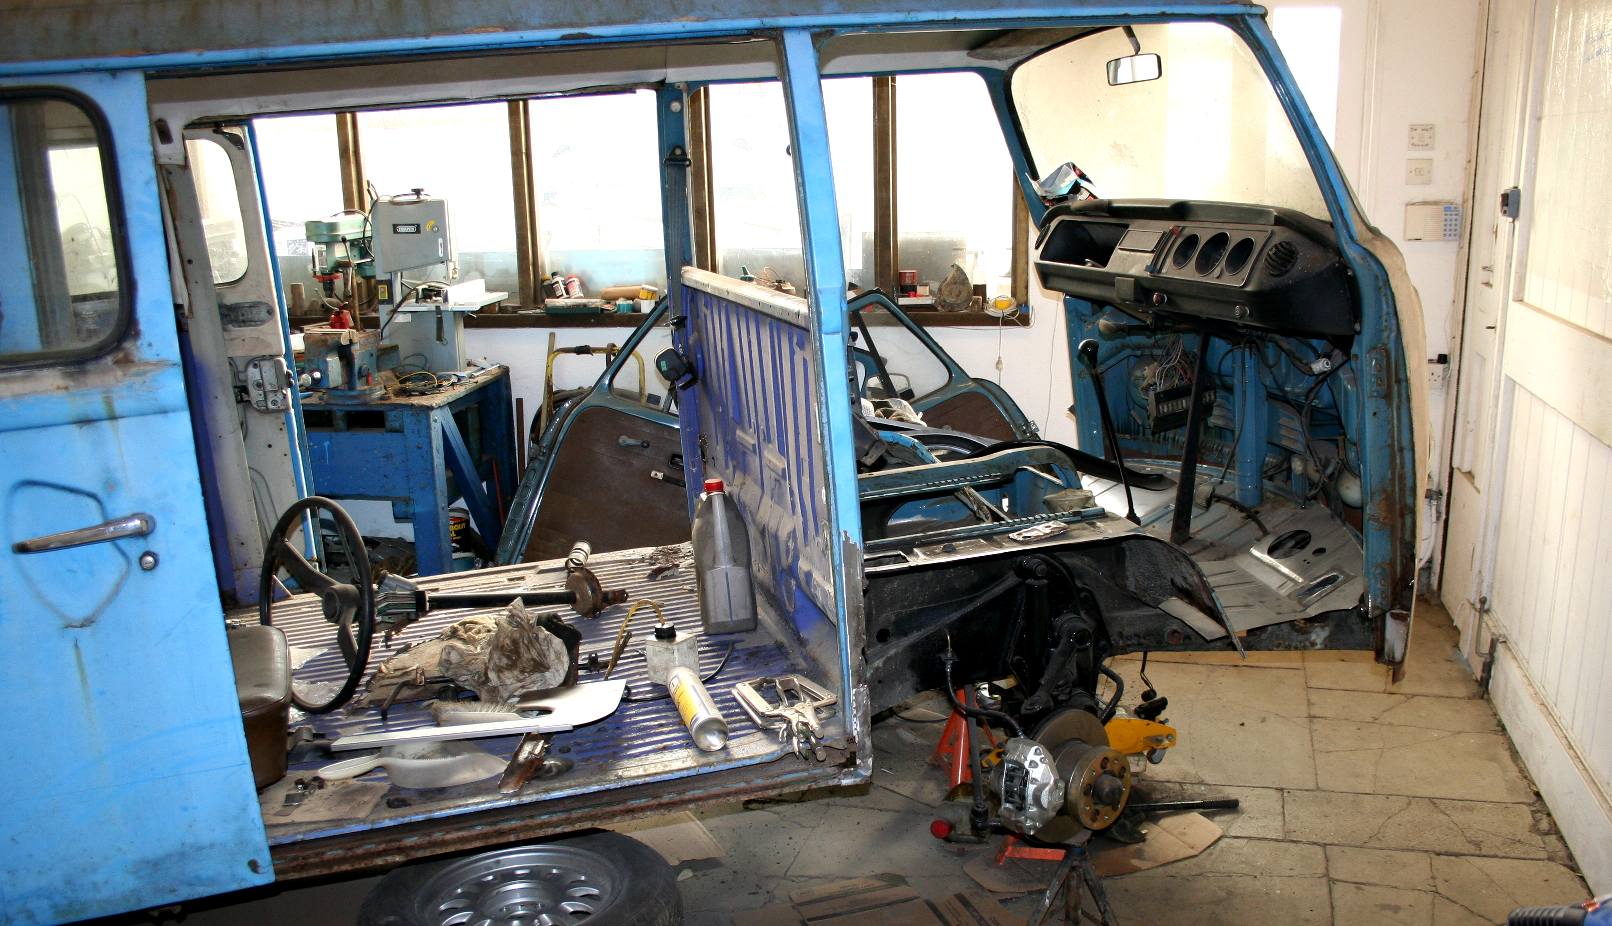 Volkswagen classic camper bus in the workshop for restoration